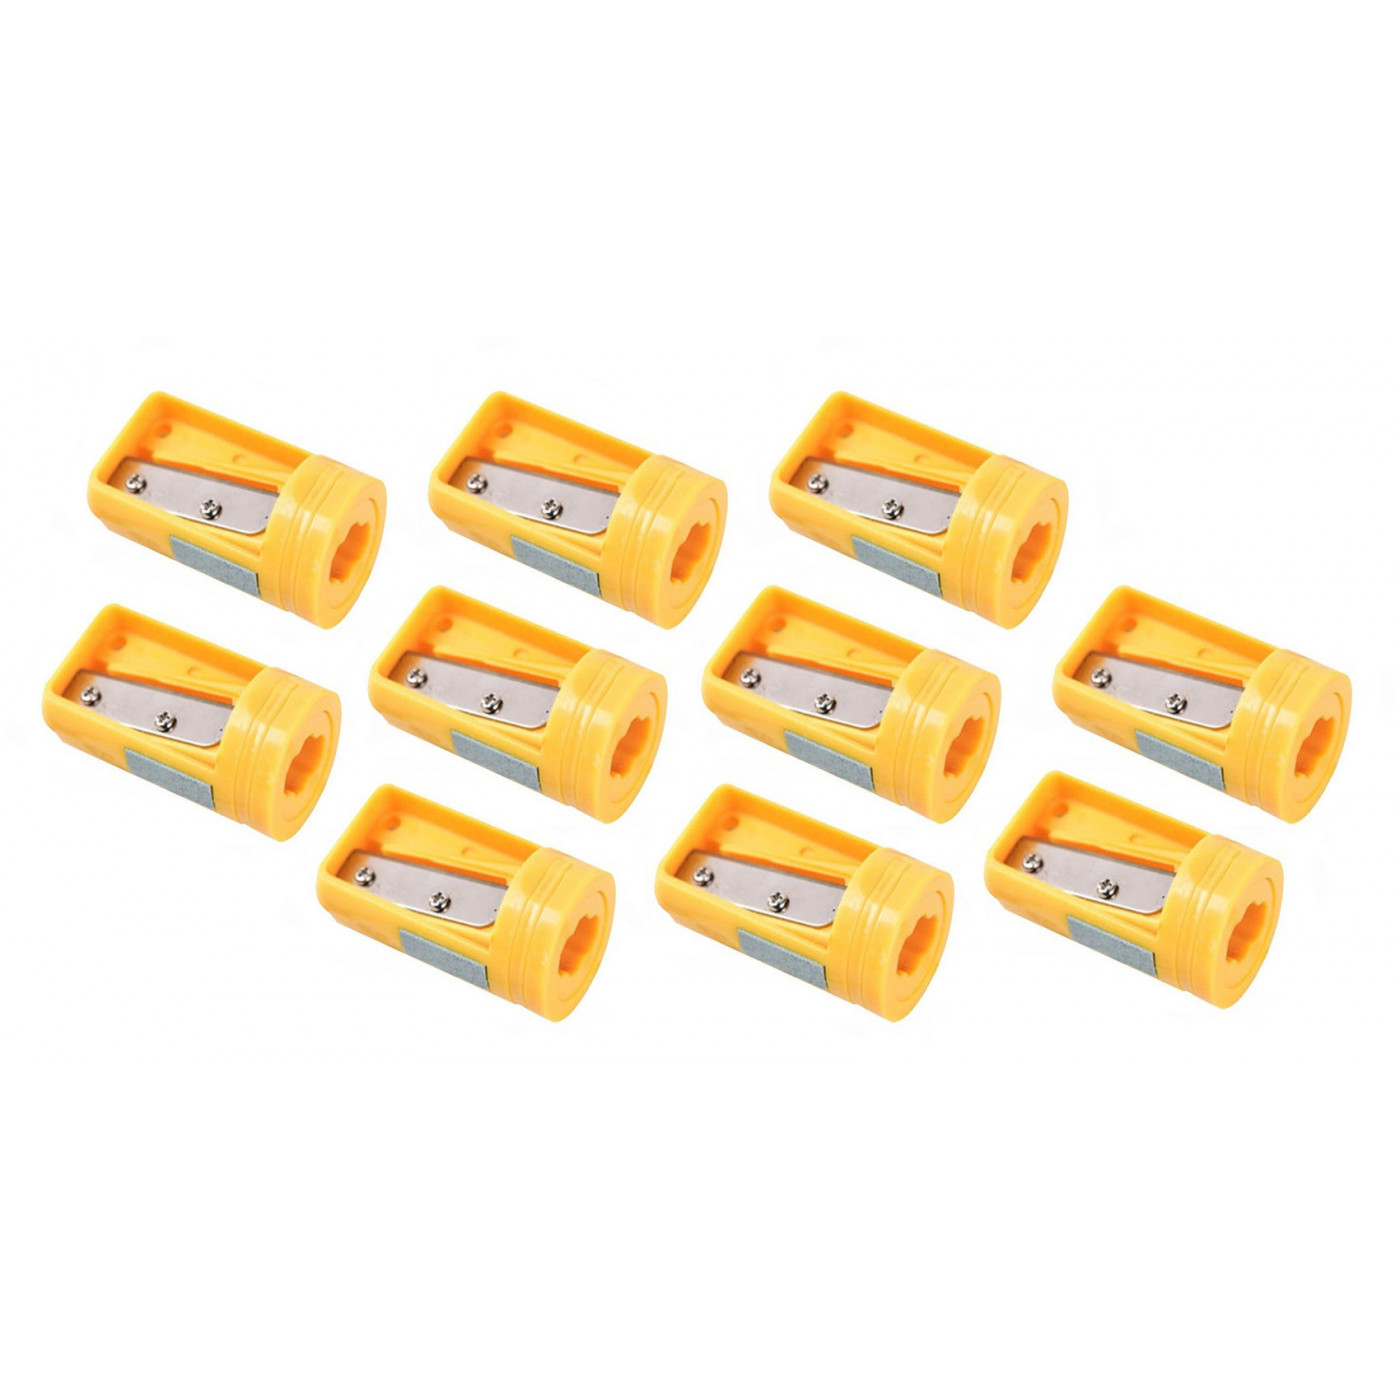 Set of 10 carpenters pencil sharpeners, yellow